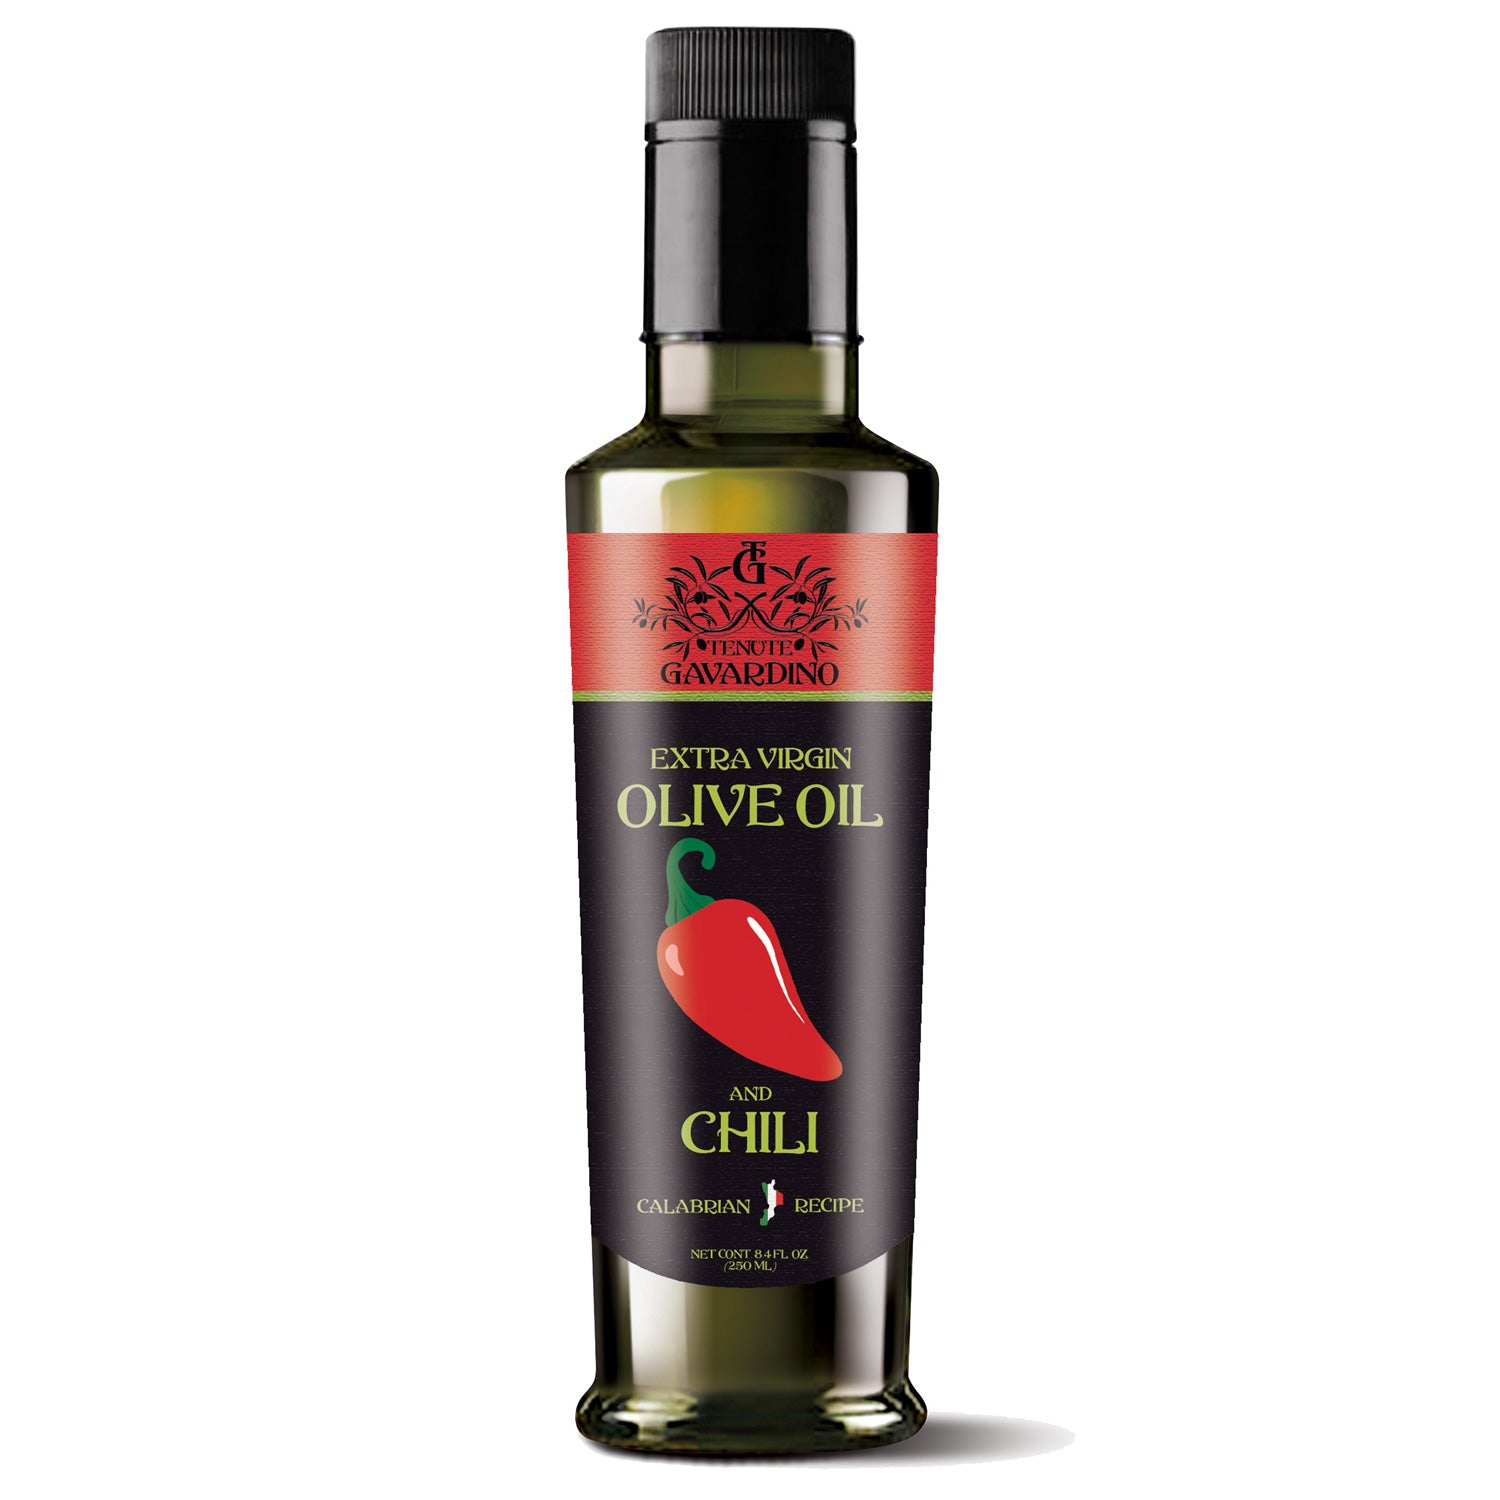 Tenute Gavardino Extra Virgin Olive Oil with Calabrian Chili